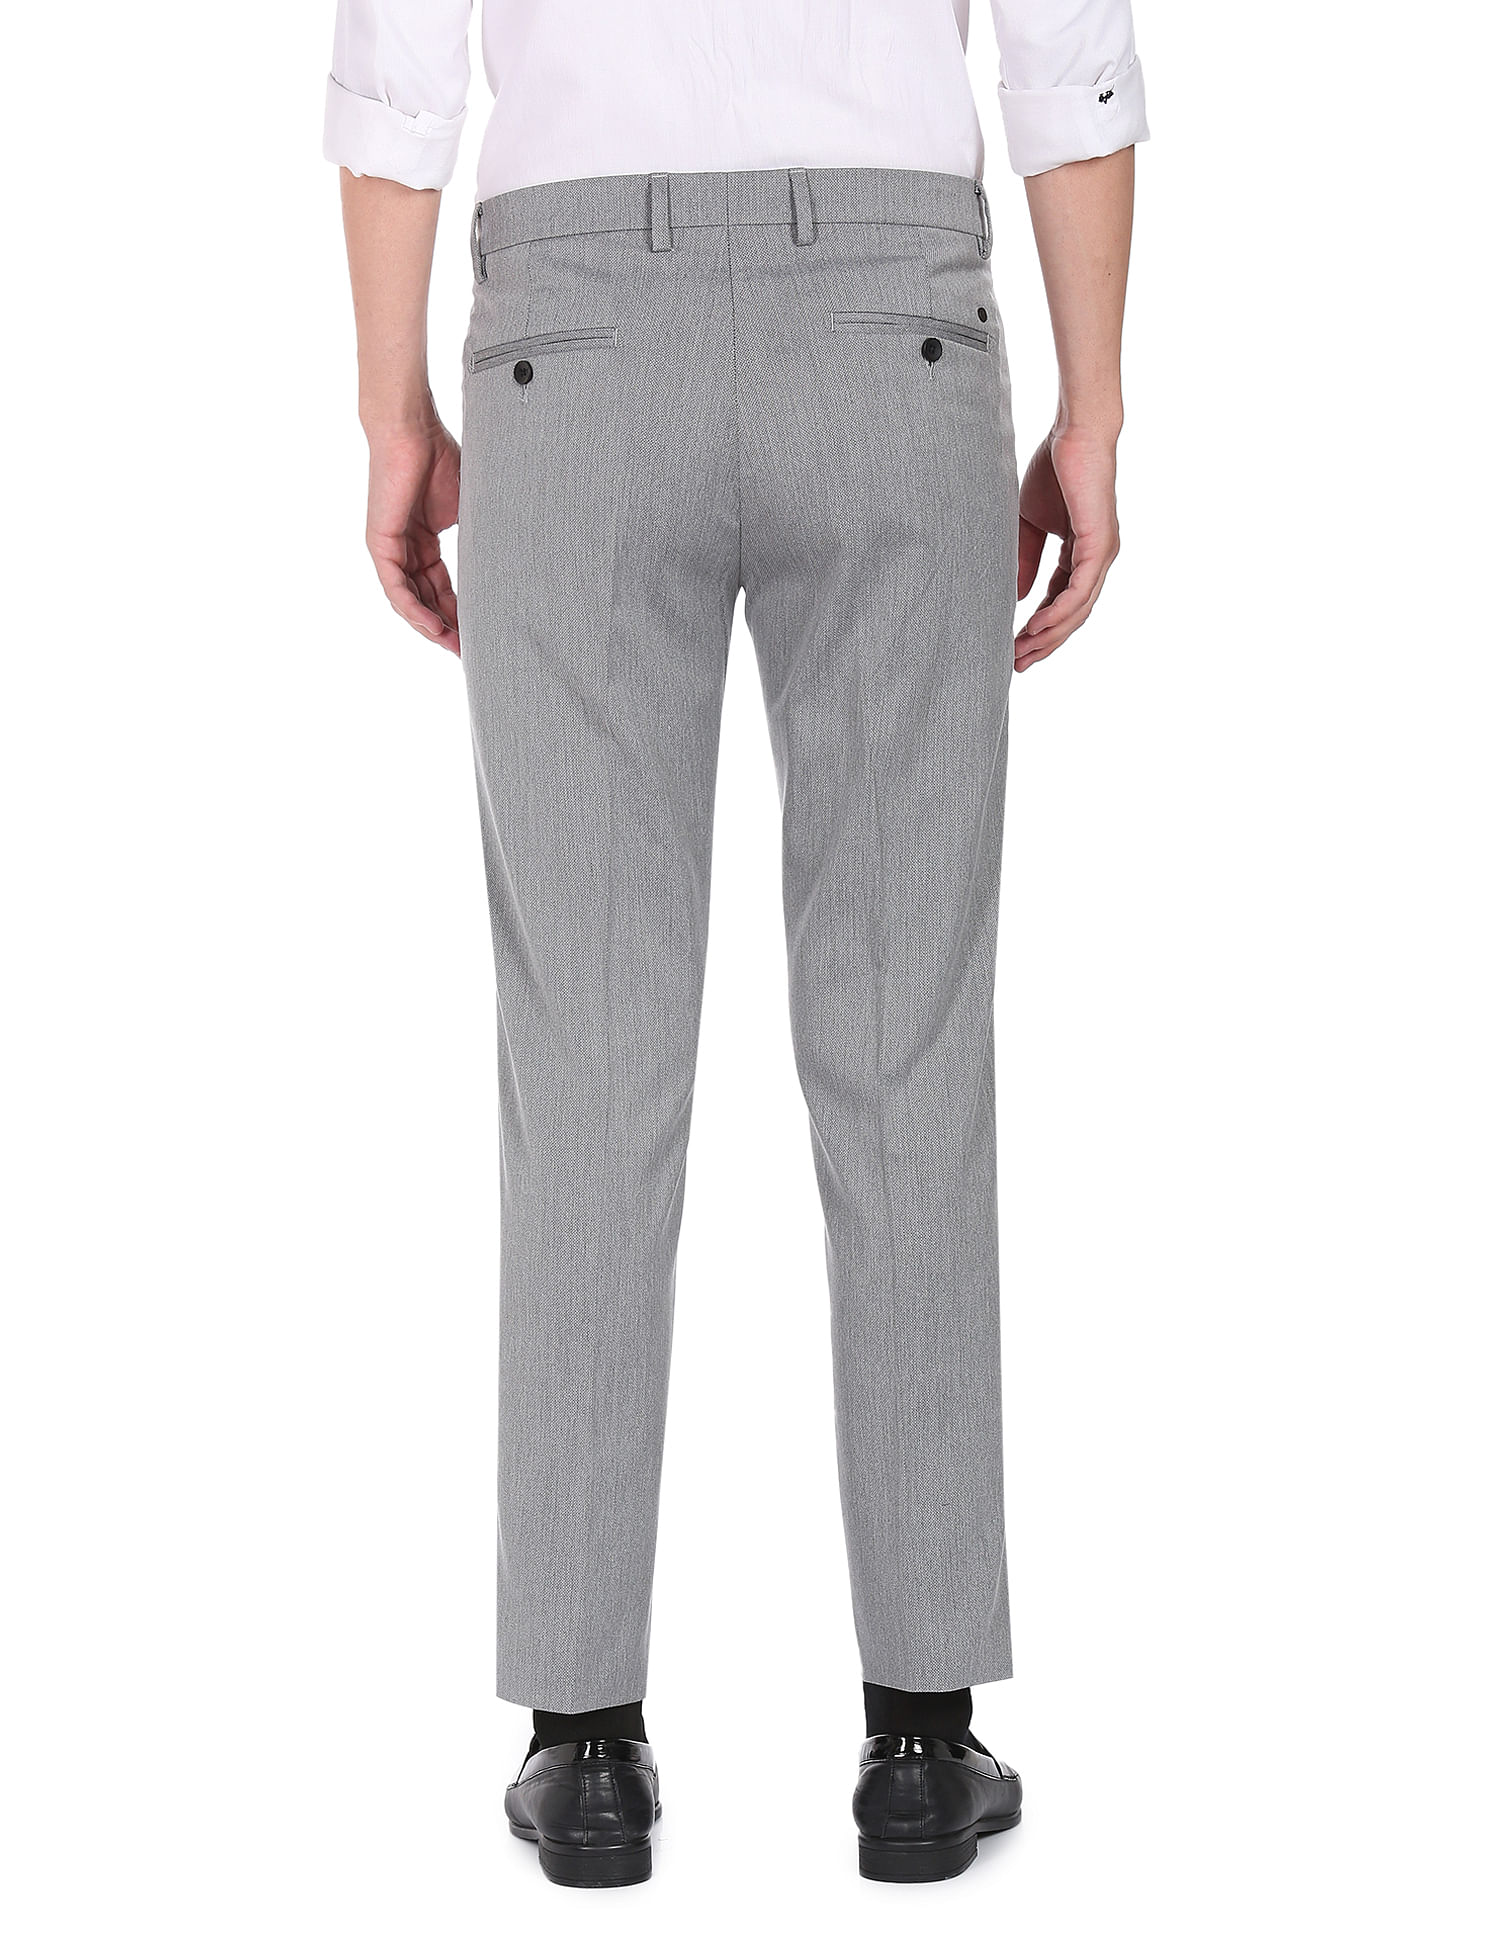 Buy Men Grey Check Slim Fit Formal Two Piece Suit Online  573471  Peter  England